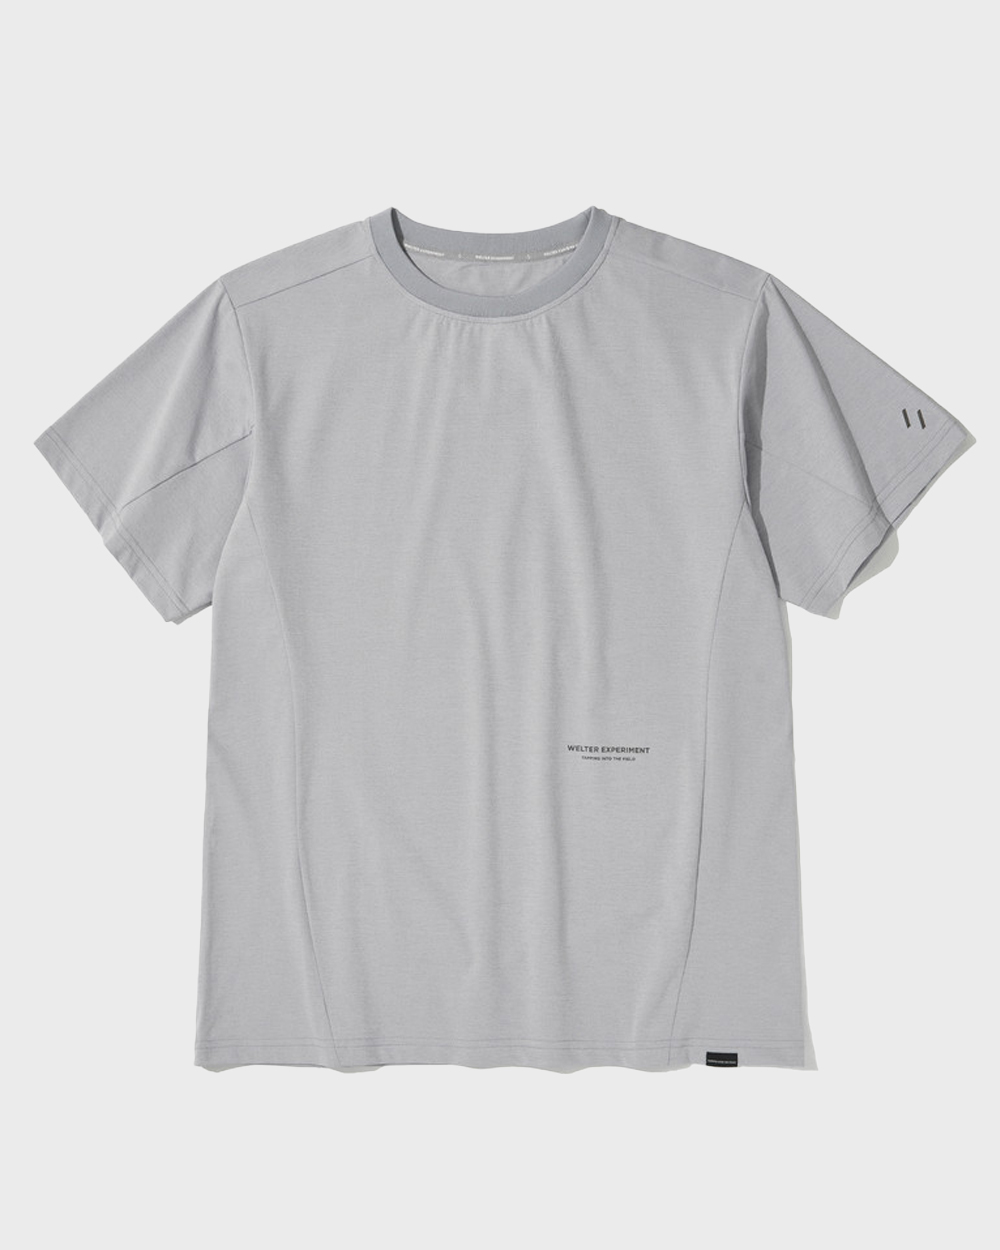 Prespa T-Shirt (Light grey)